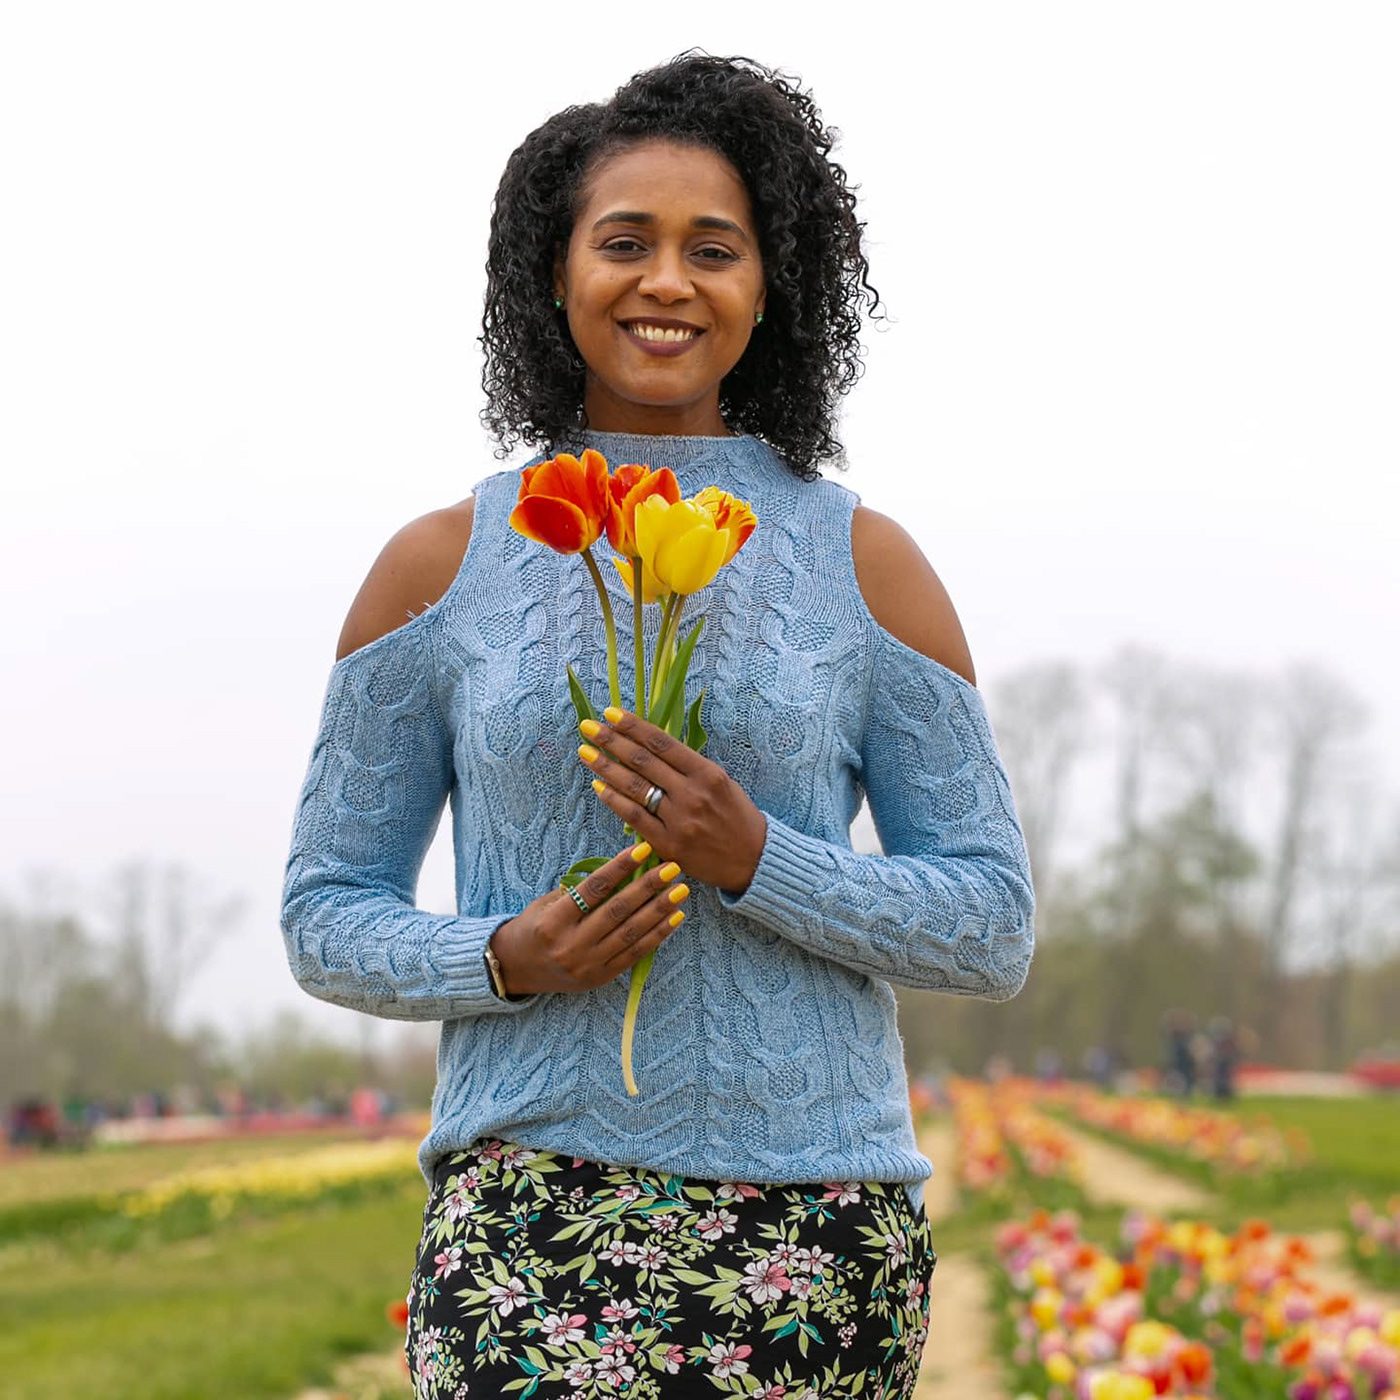 5D MK III black woman Flowers portrait photography spring photos tulips